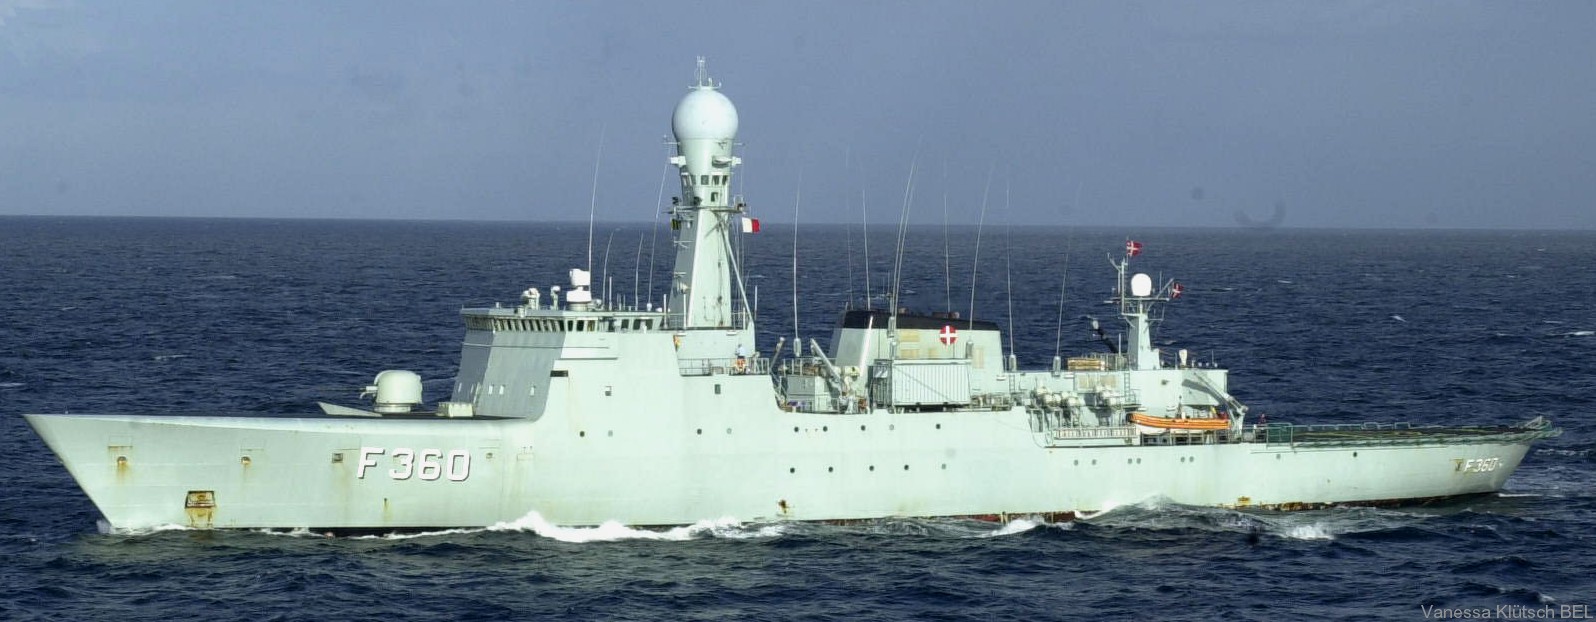 f-360 hdms hvidbjornen thetis class ocean patrol frigate royal danish navy kongelige danske marine kdm inspektionsskibet 10